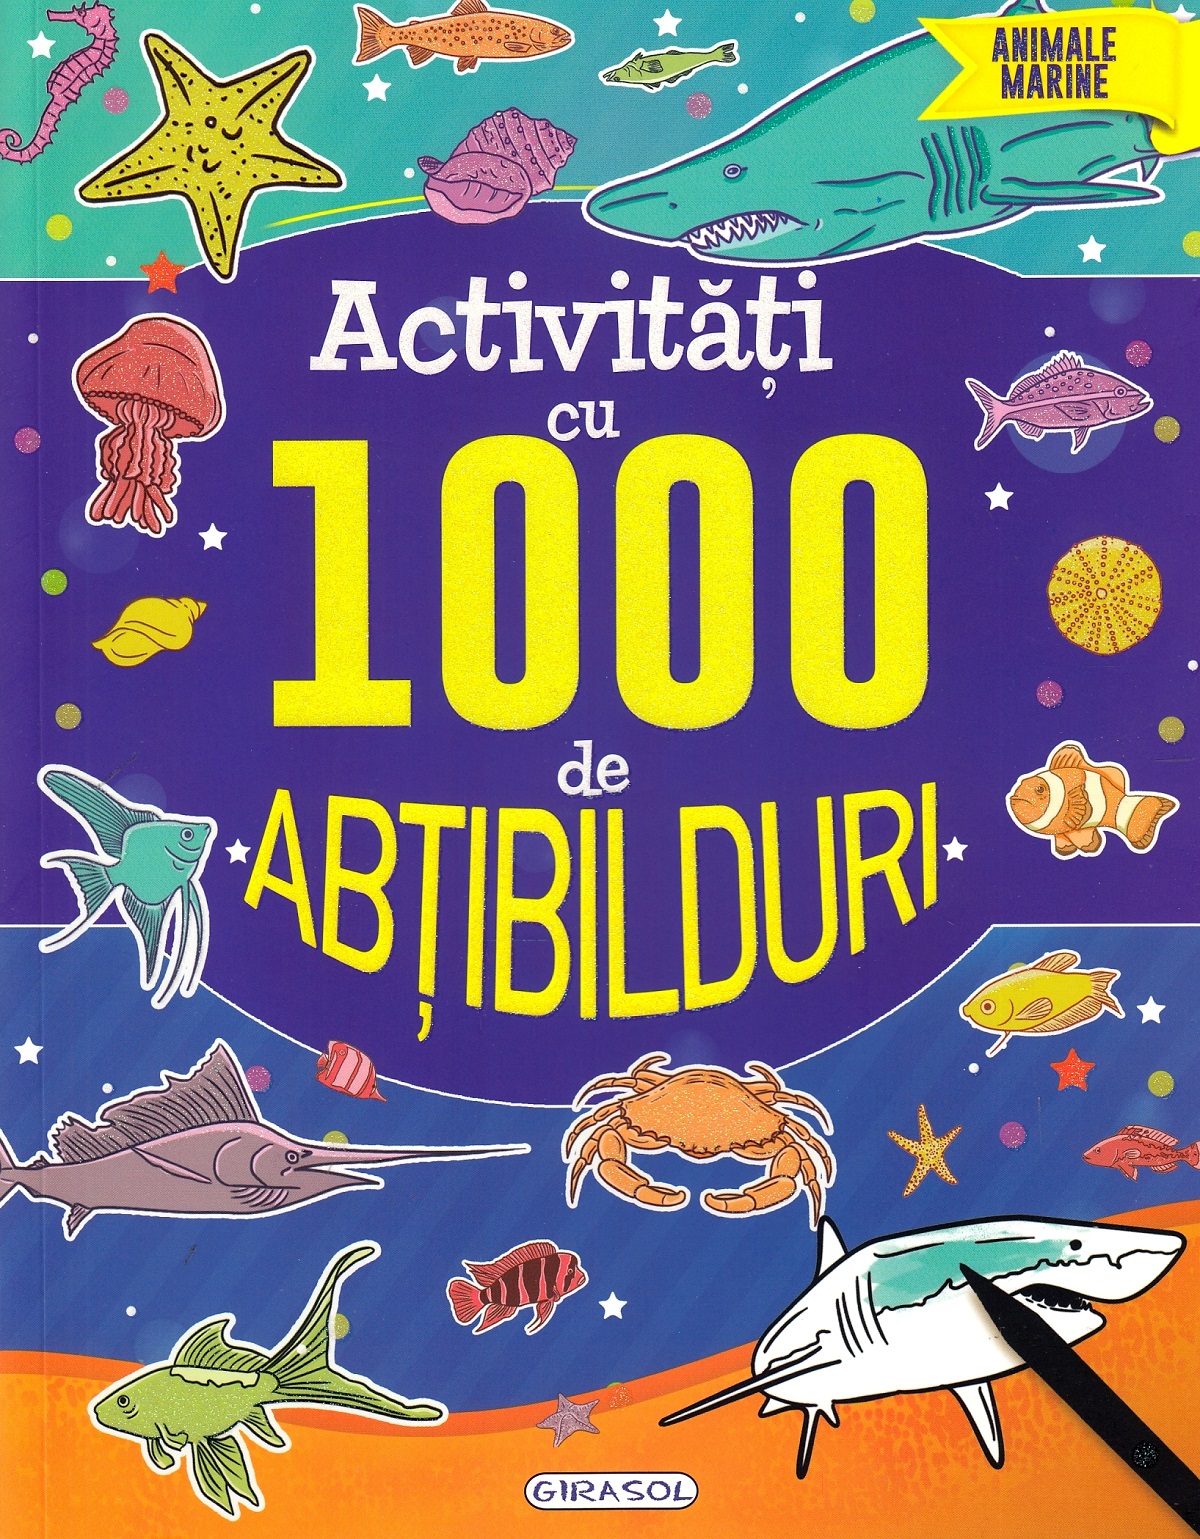 Activitati cu 1000 de abtibilduri: Animale marine